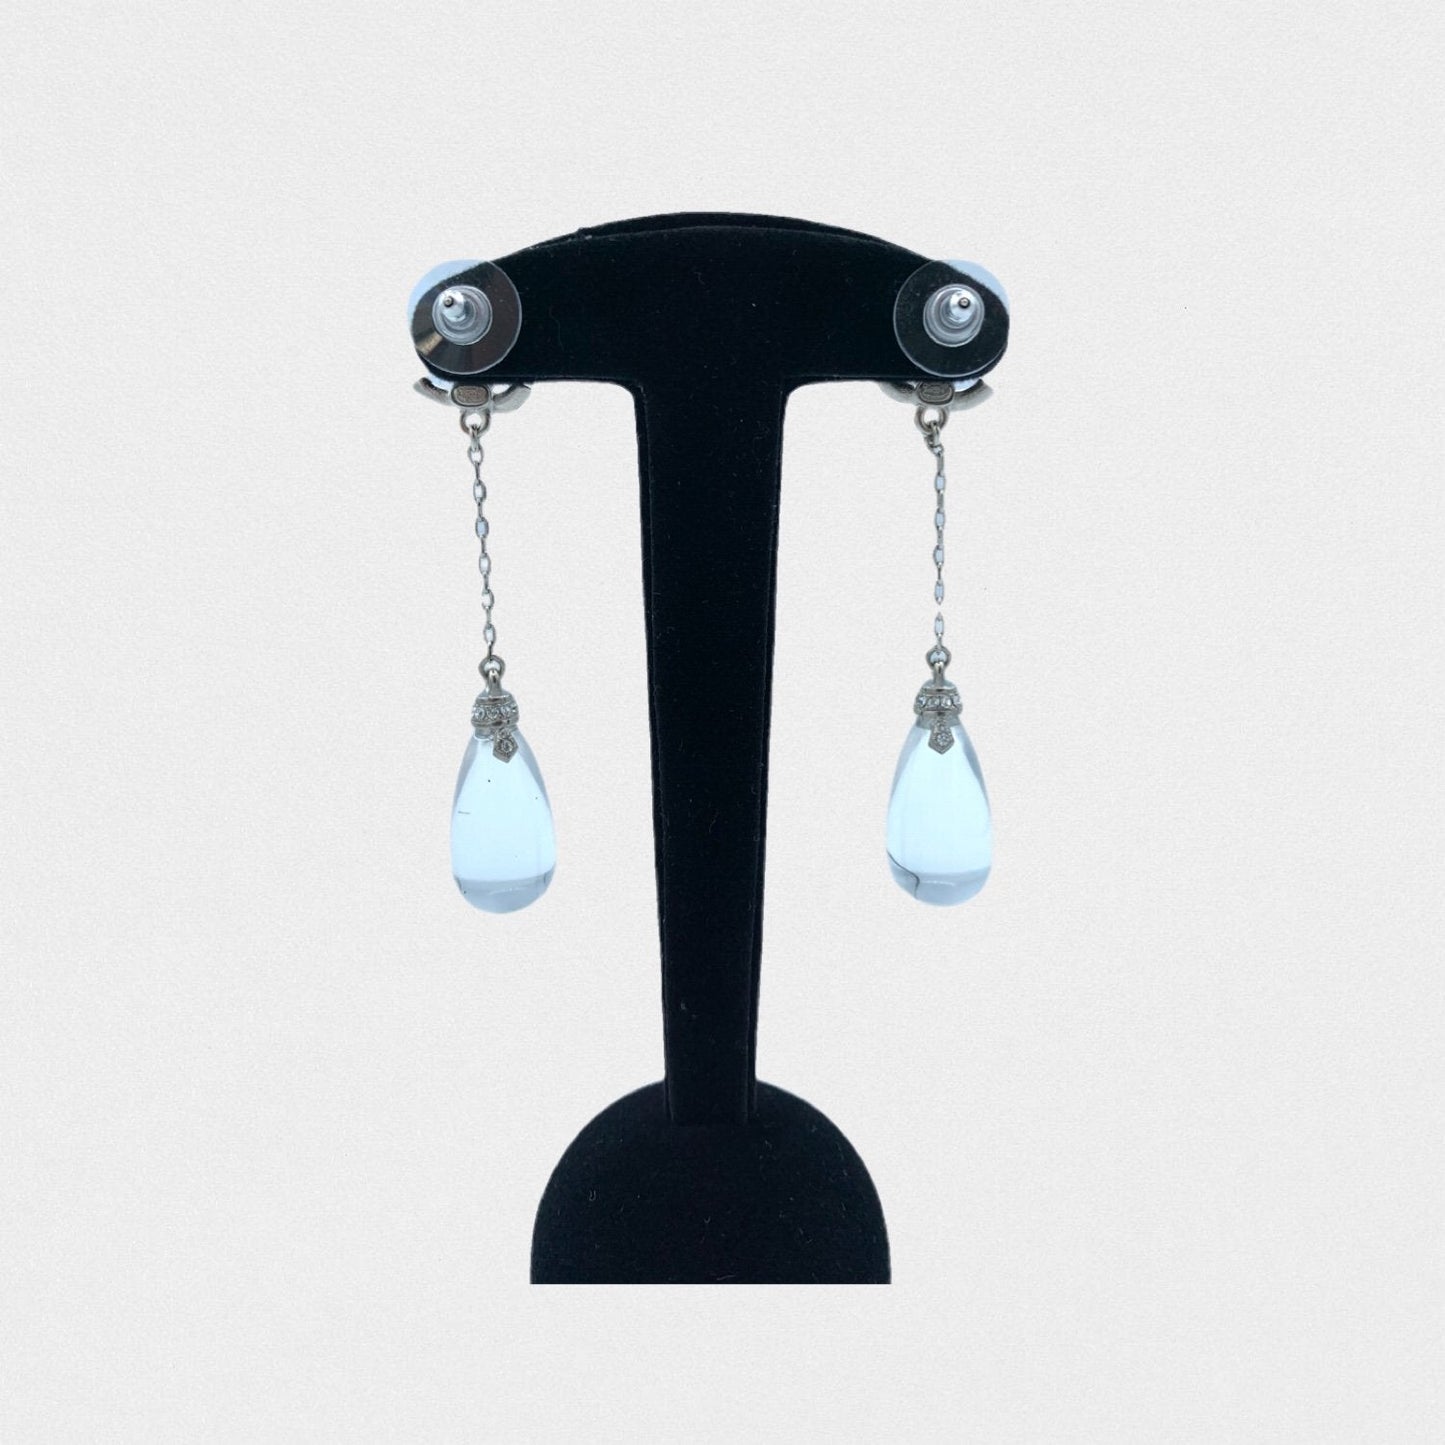 Lysis vintage Chanel water drops pendant earrings - 2010s